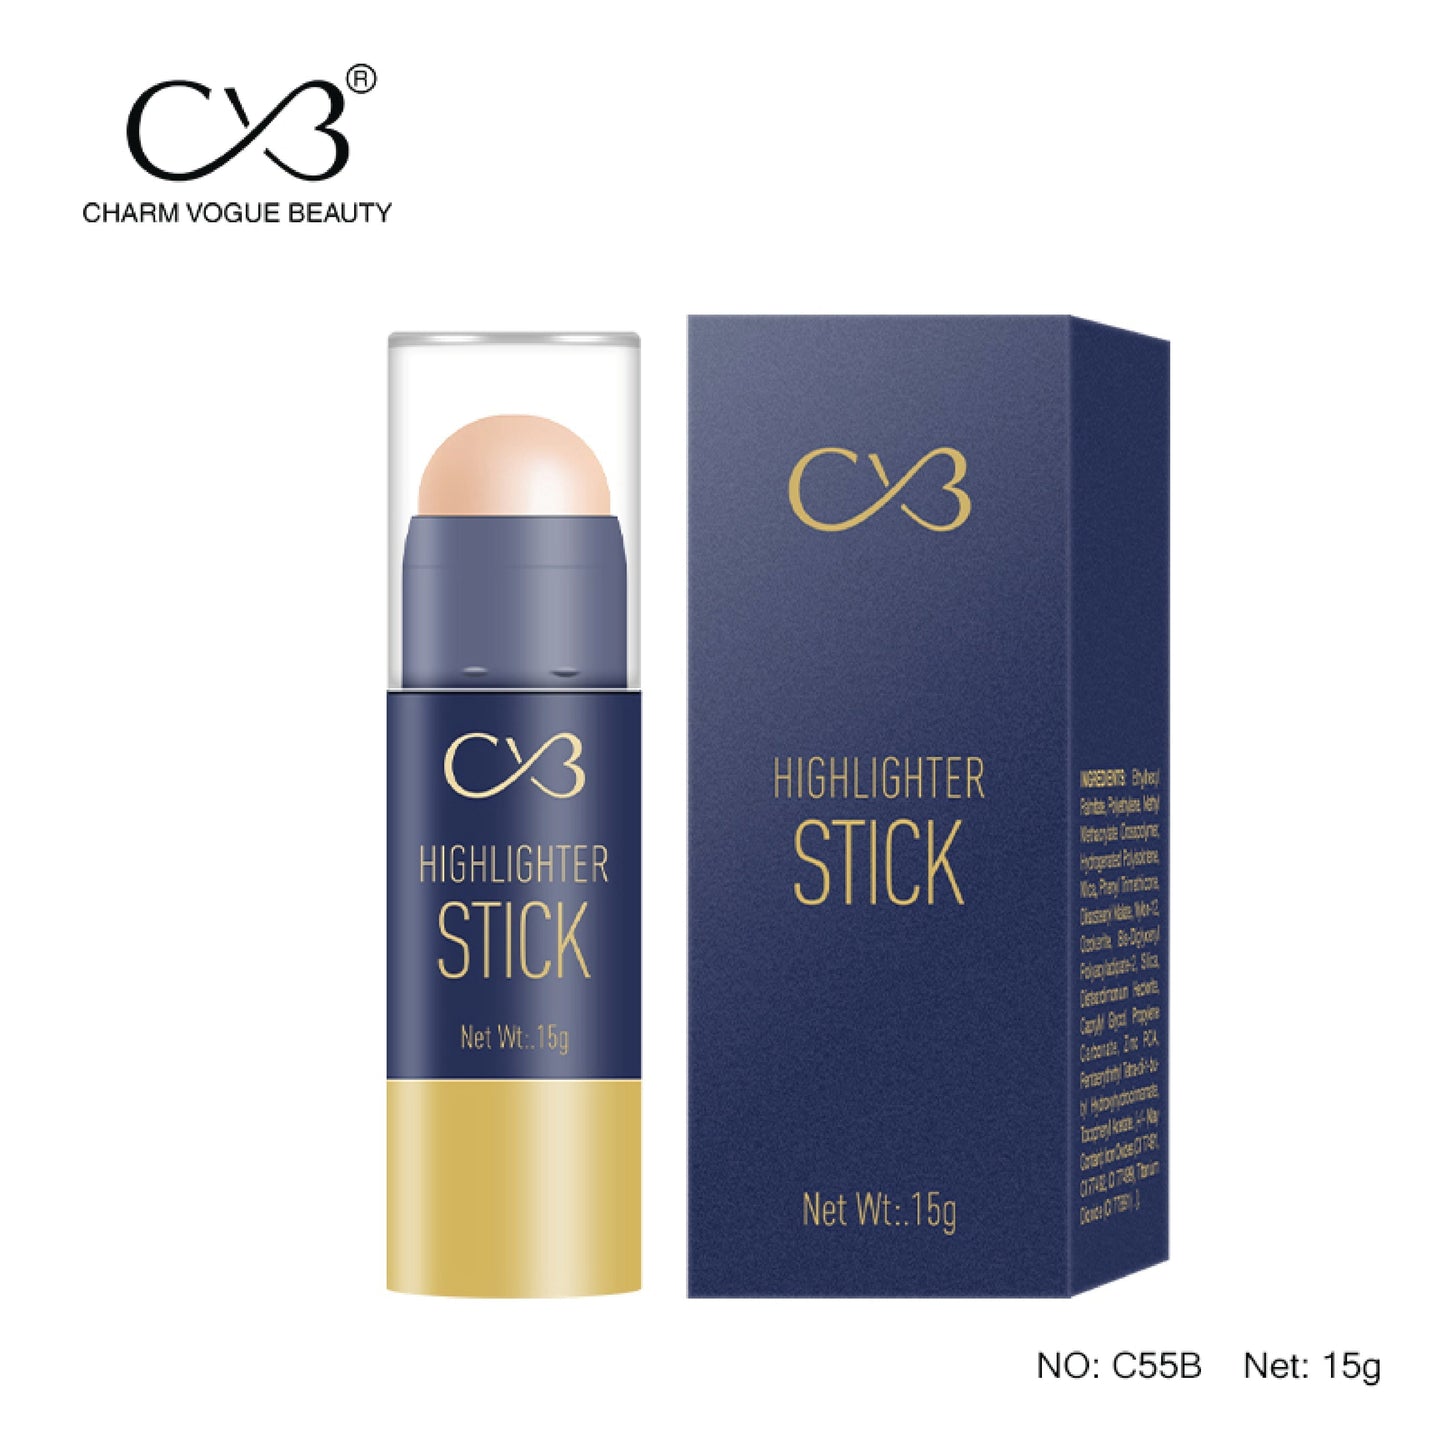 CVB Highlighter Stick + Spounge